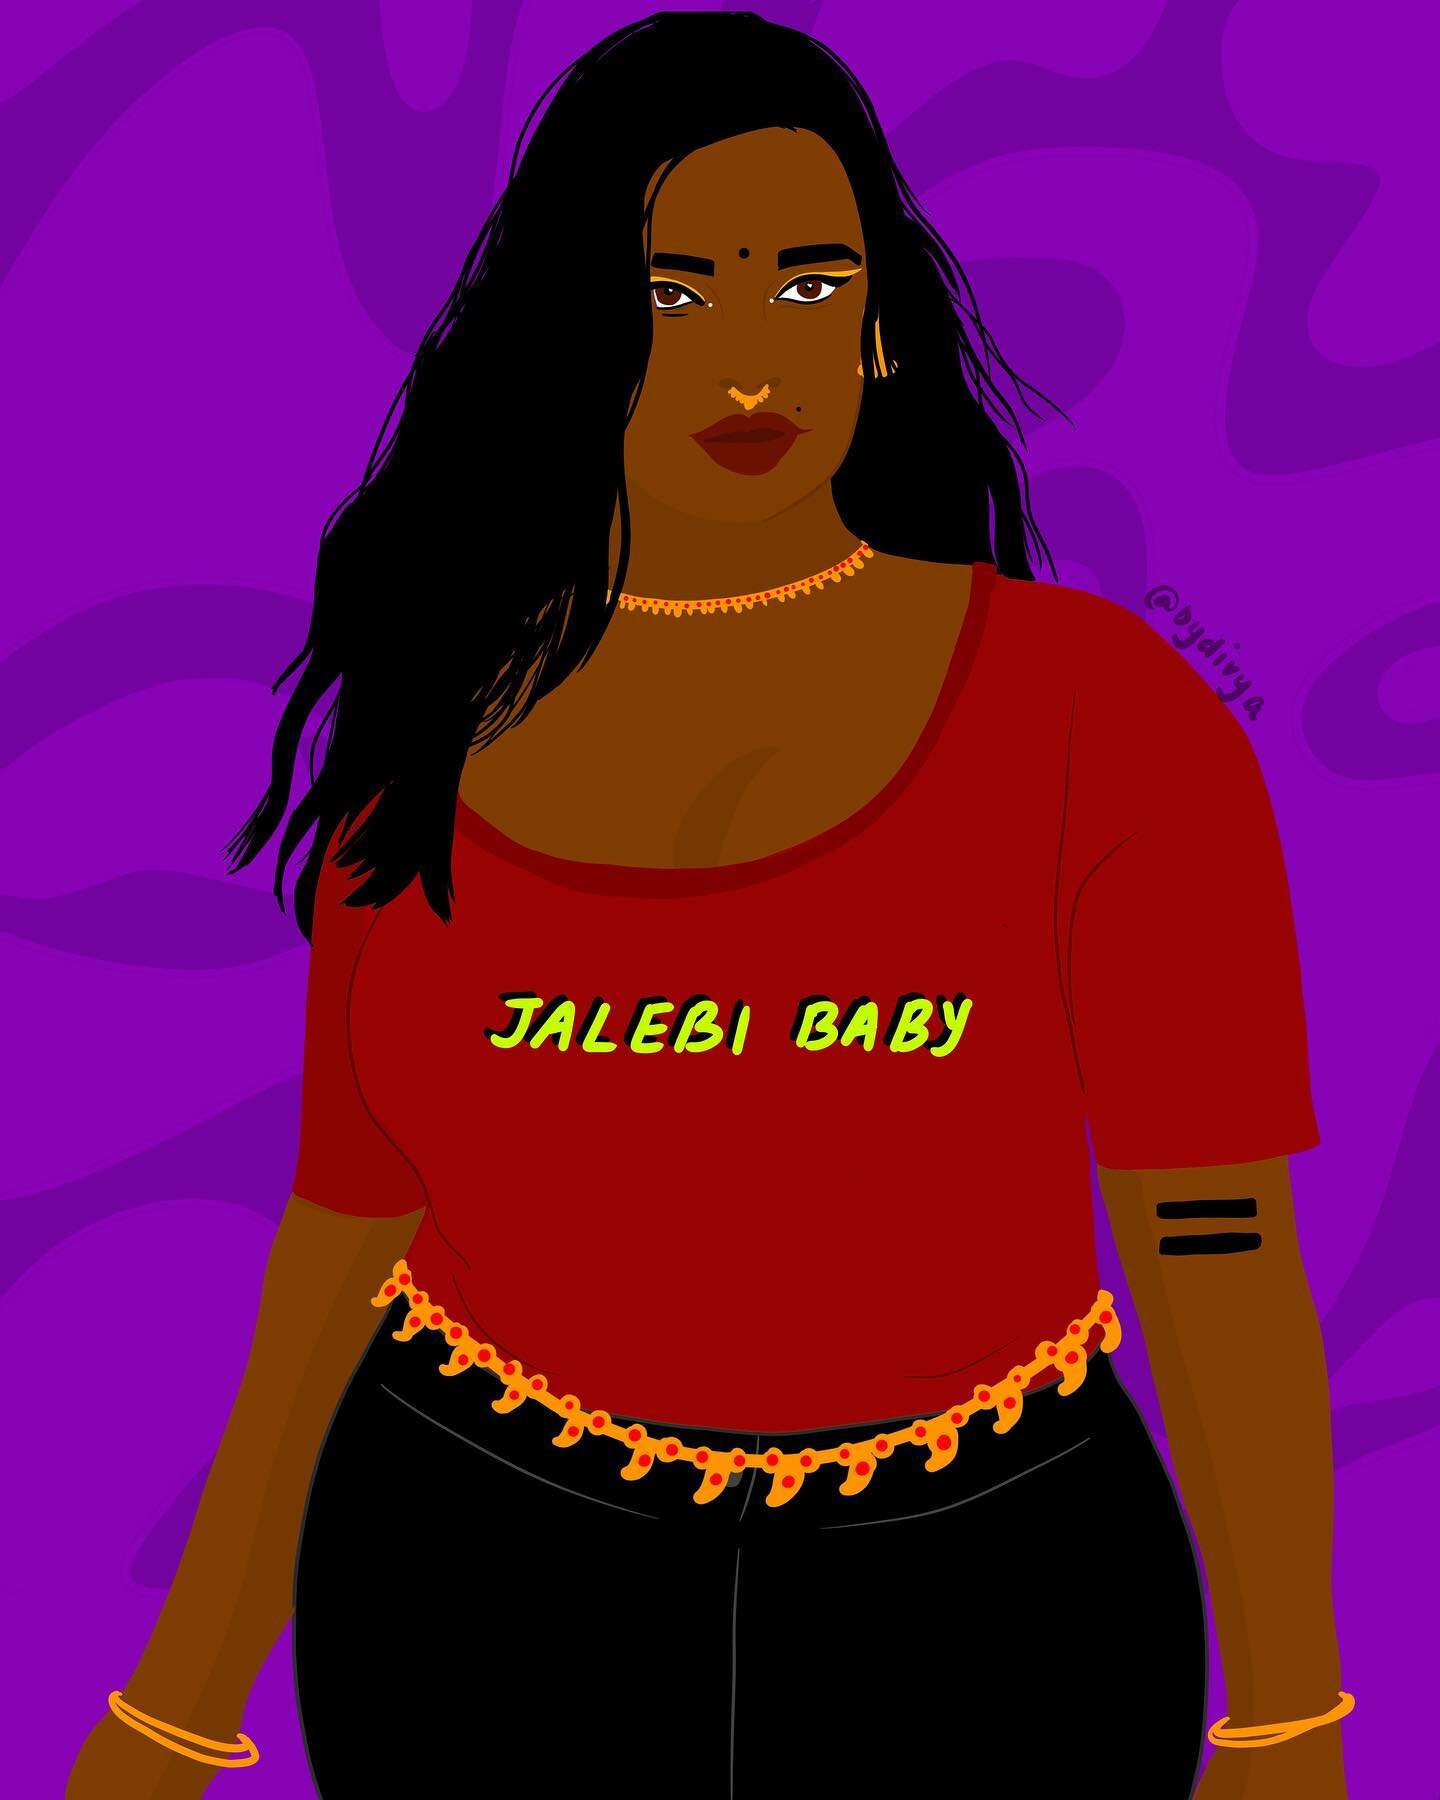 🚨HOT N SWEET LIKE A JALEBI BABY 🚨 (I&rsquo;ve been spending too much time on desi tik tok) &bull;
&bull;
&bull;
&bull;
&bull;
&bull;
&bull;
&bull;
&bull;
&bull;#illustration #art #desi #indian #desiart #jalebi #jalebibaby #tiktok #womenwhodraw